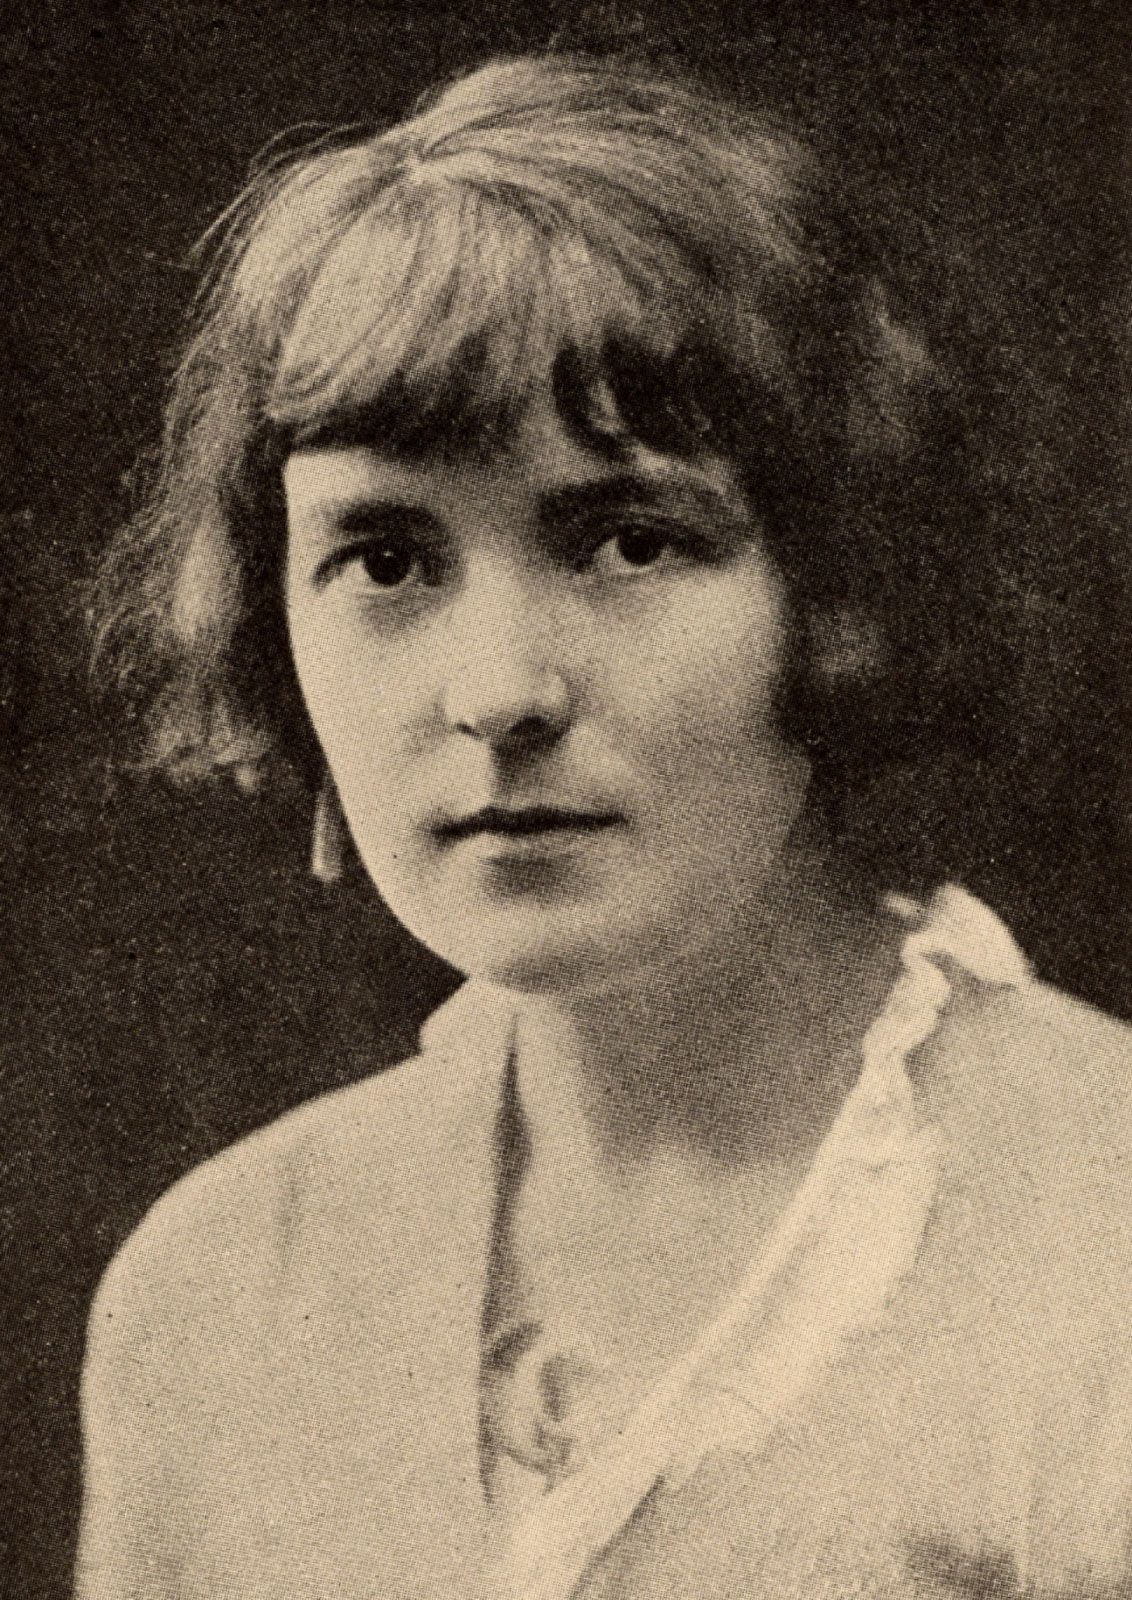  Biographie de Katherine Mansfield